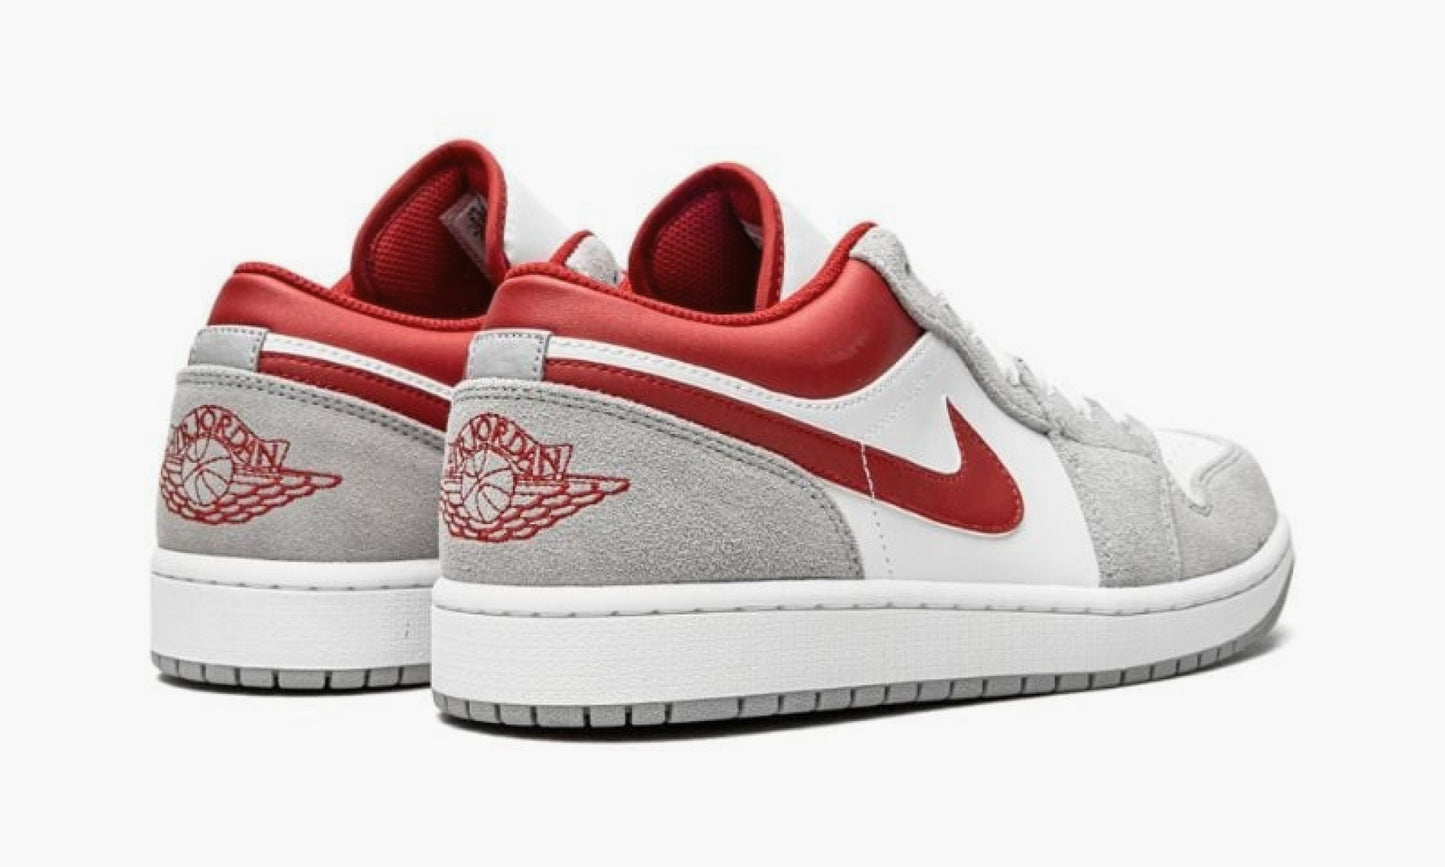 Nike Air Jordan 1 Low SE “Light Smoke Grey Gym Red” - DC6991 016 | Grailshop 